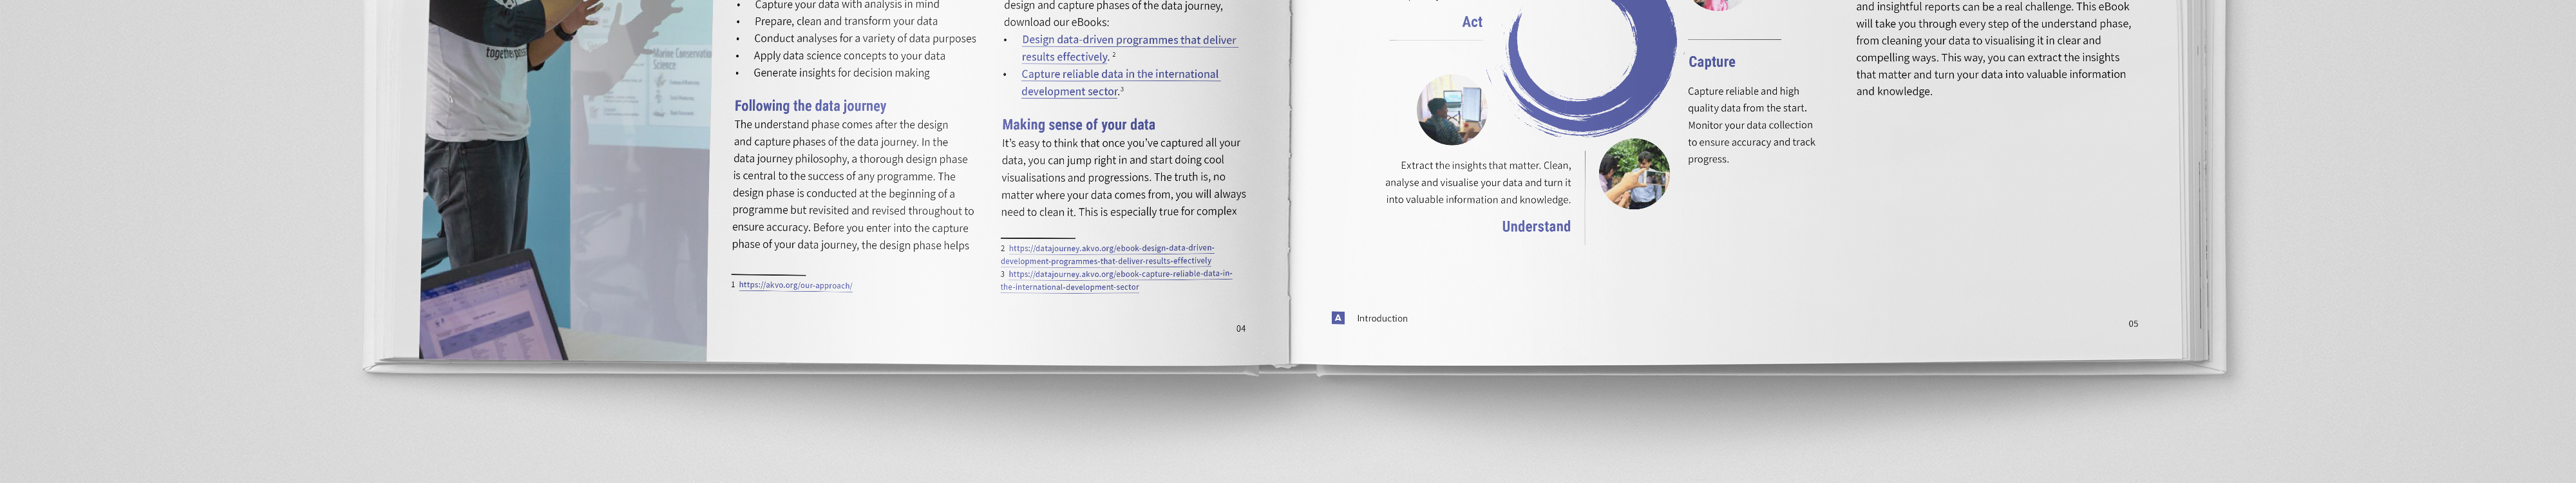 eBook3 Hubspot -landing page header XLARGE